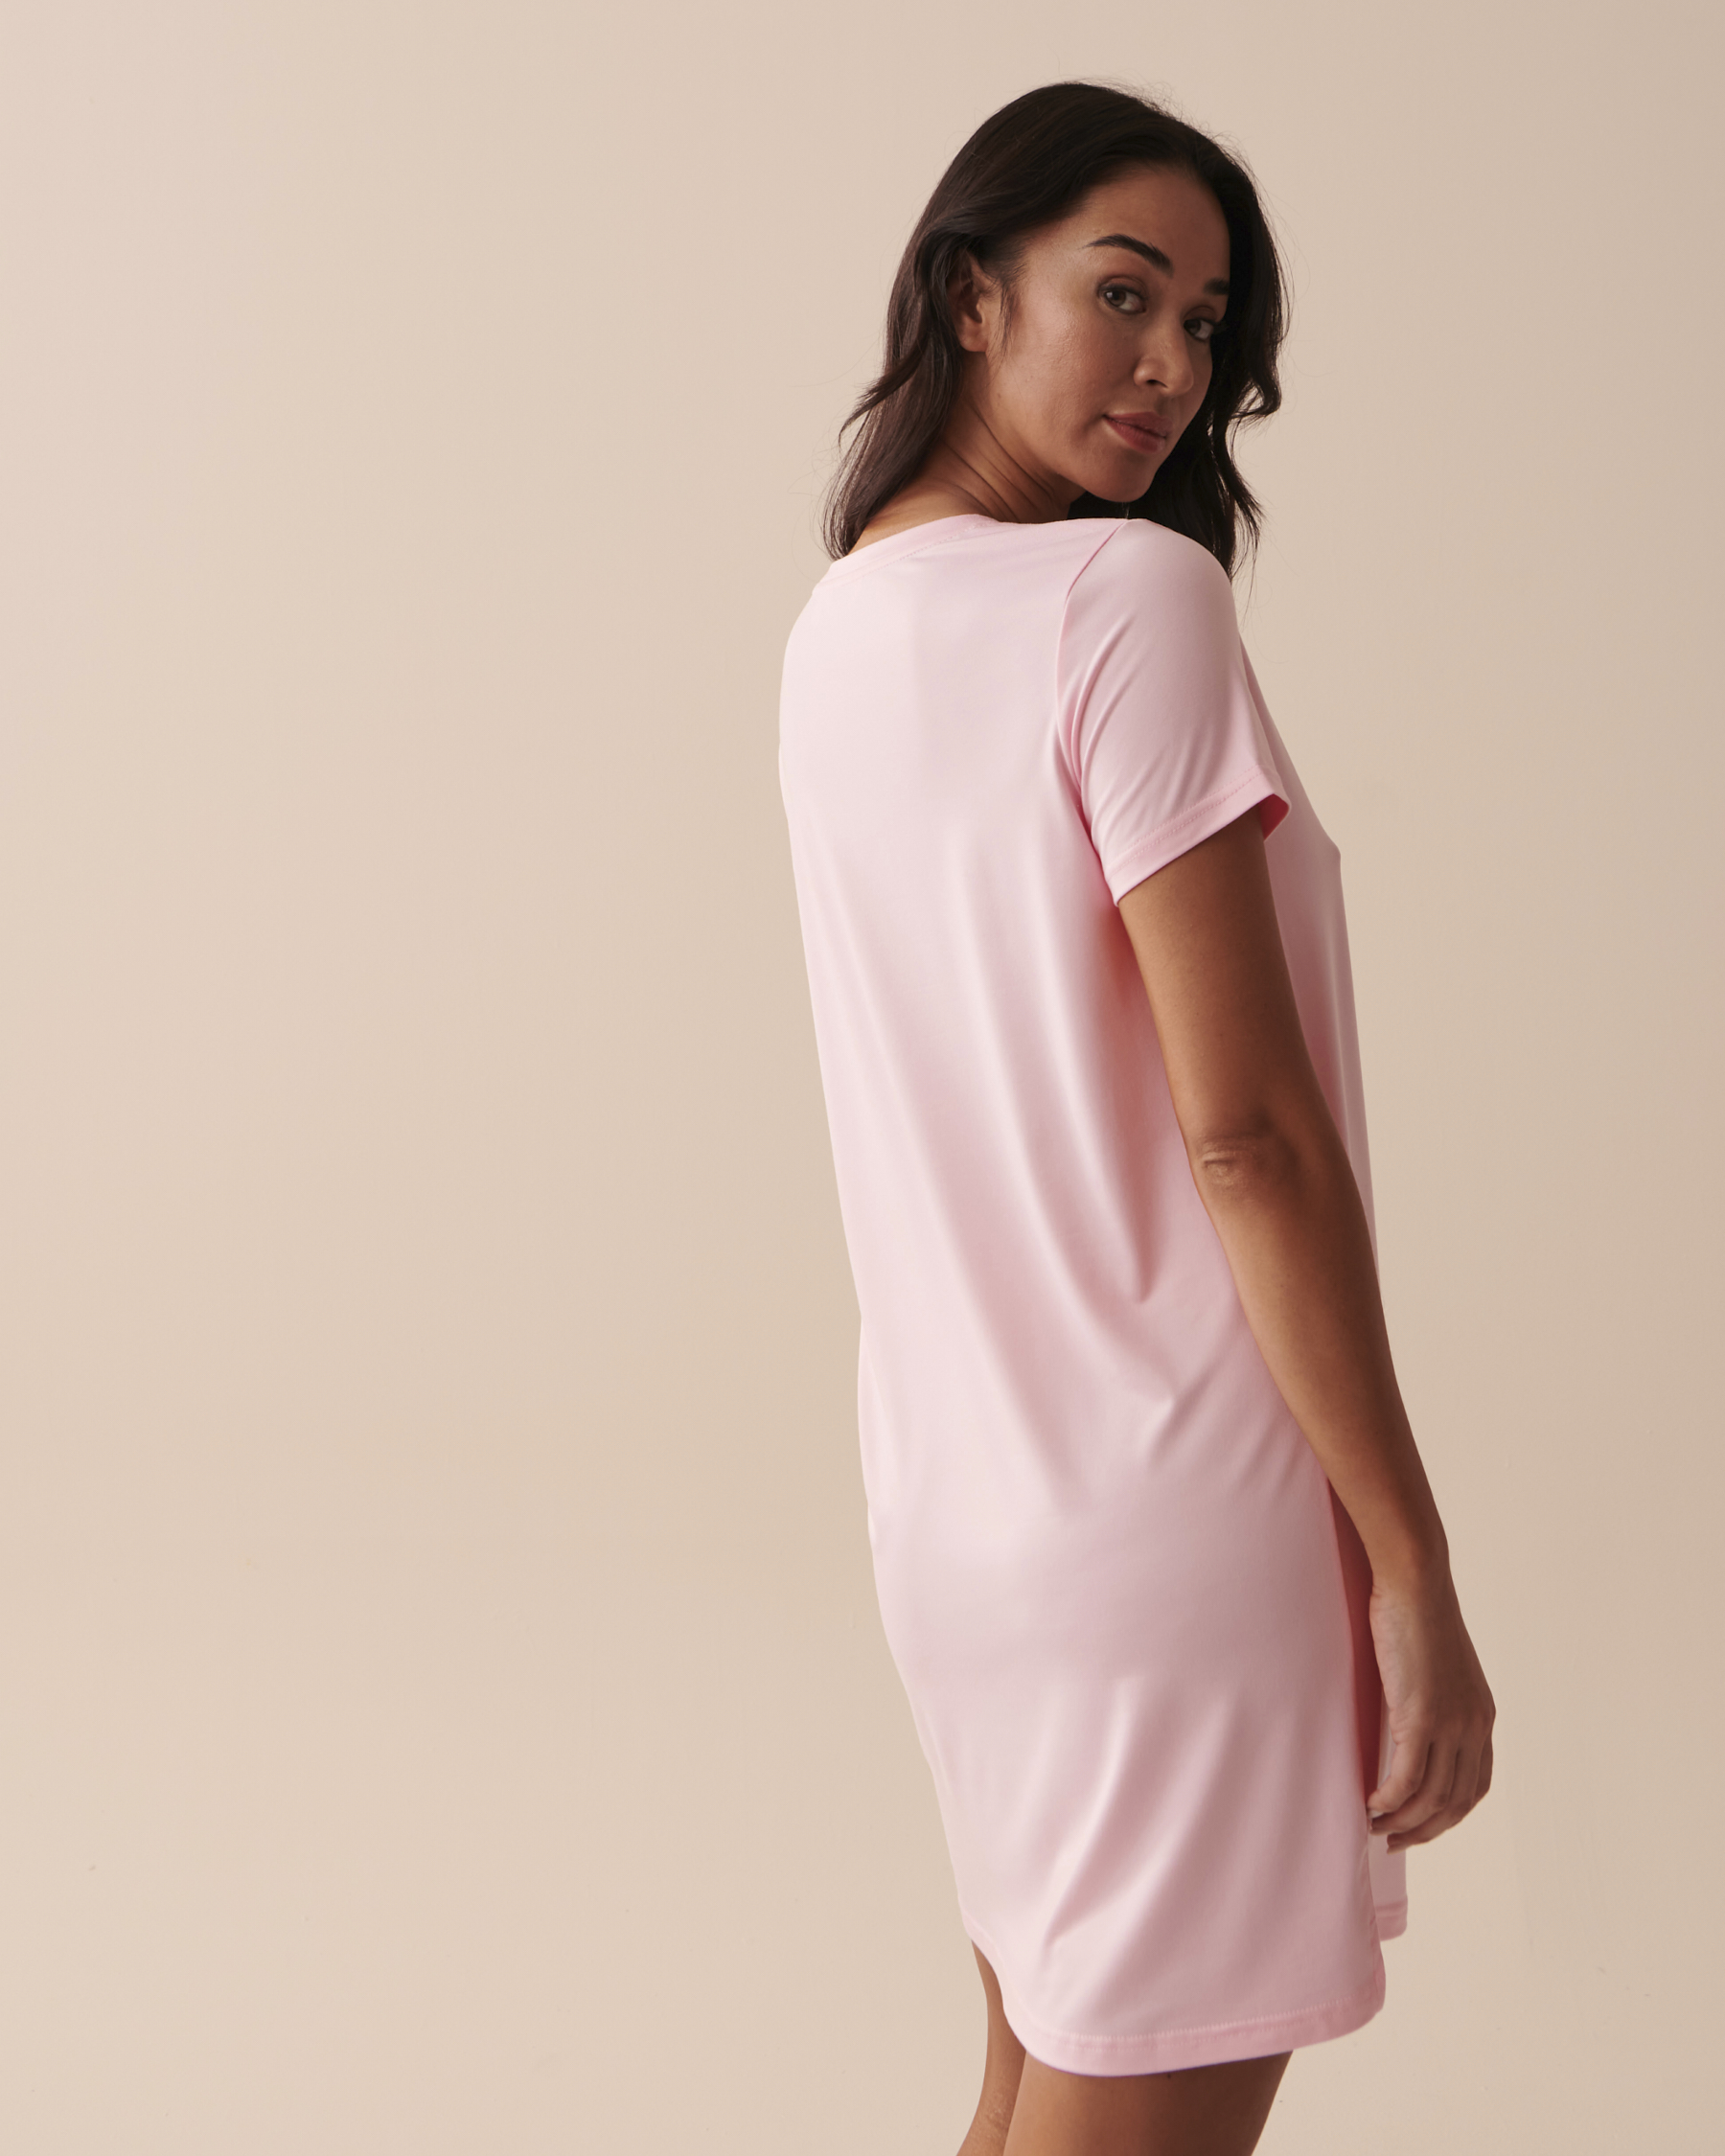 LA VIE EN ROSE Dalmatians Super Soft Sleepshirt Tender Pink 40500328 - View2